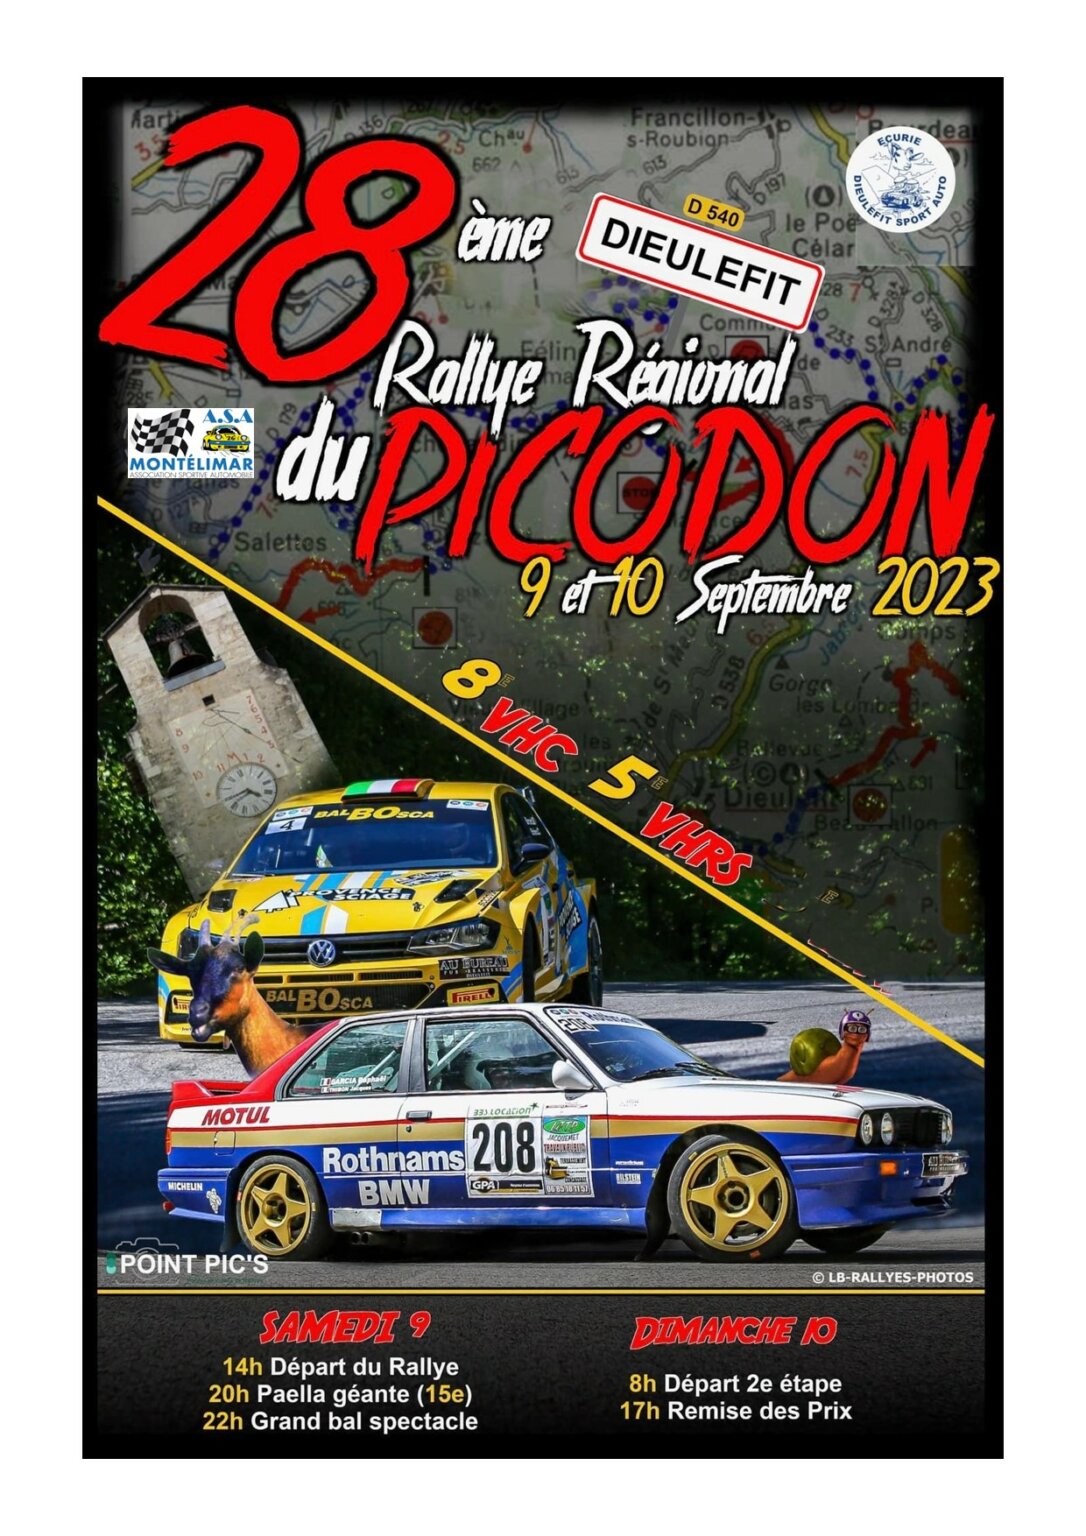 Le Rallye du Picodon fête ses 28 ans en 2023.